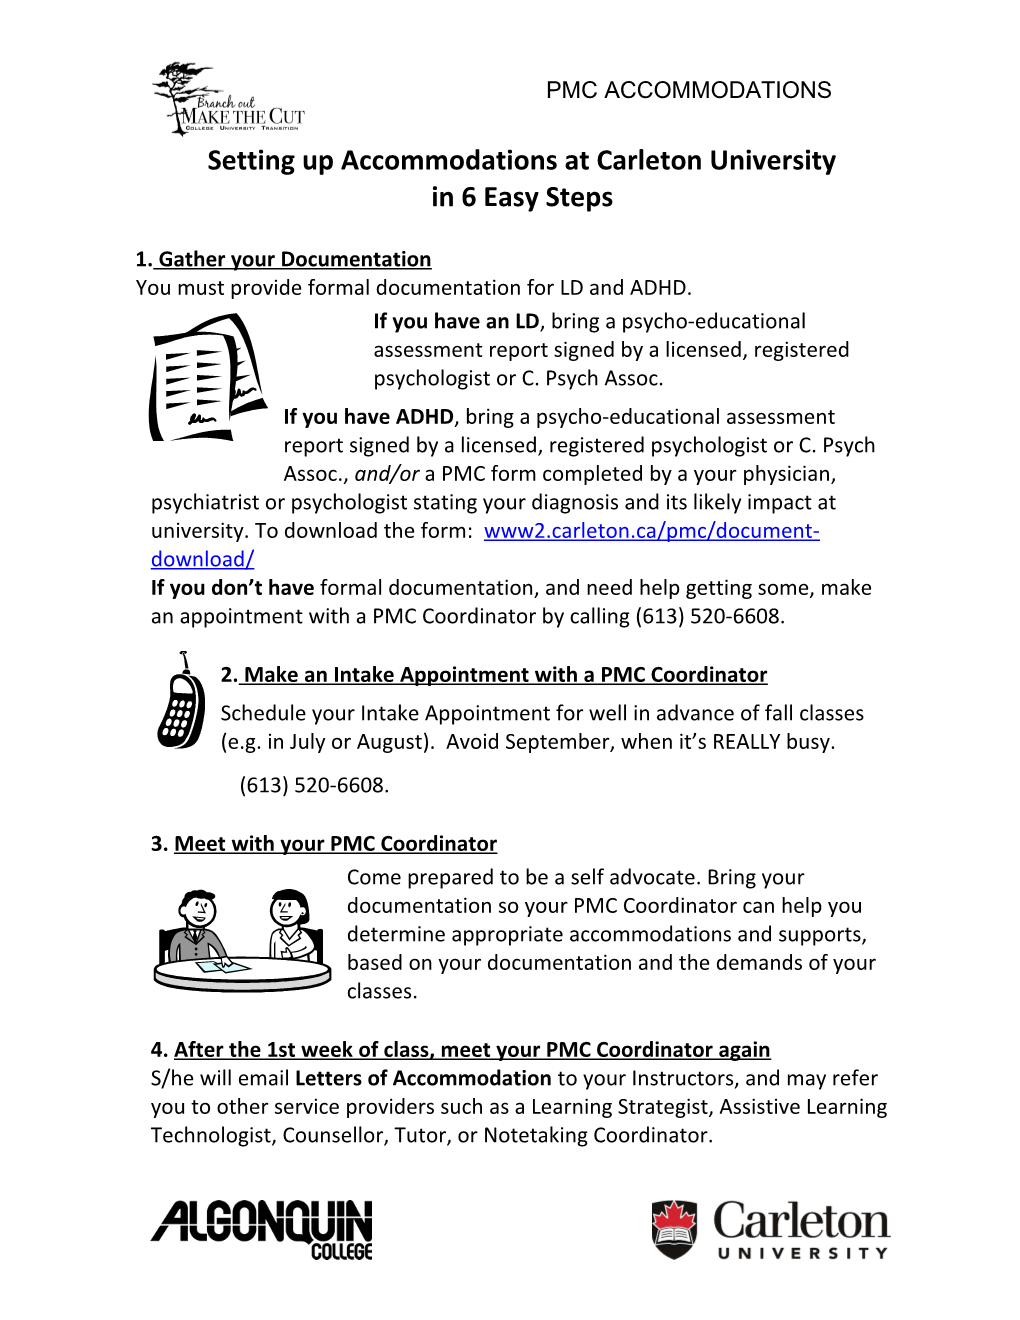 The Process of Obtaining Academic Accommodations at Carleton University